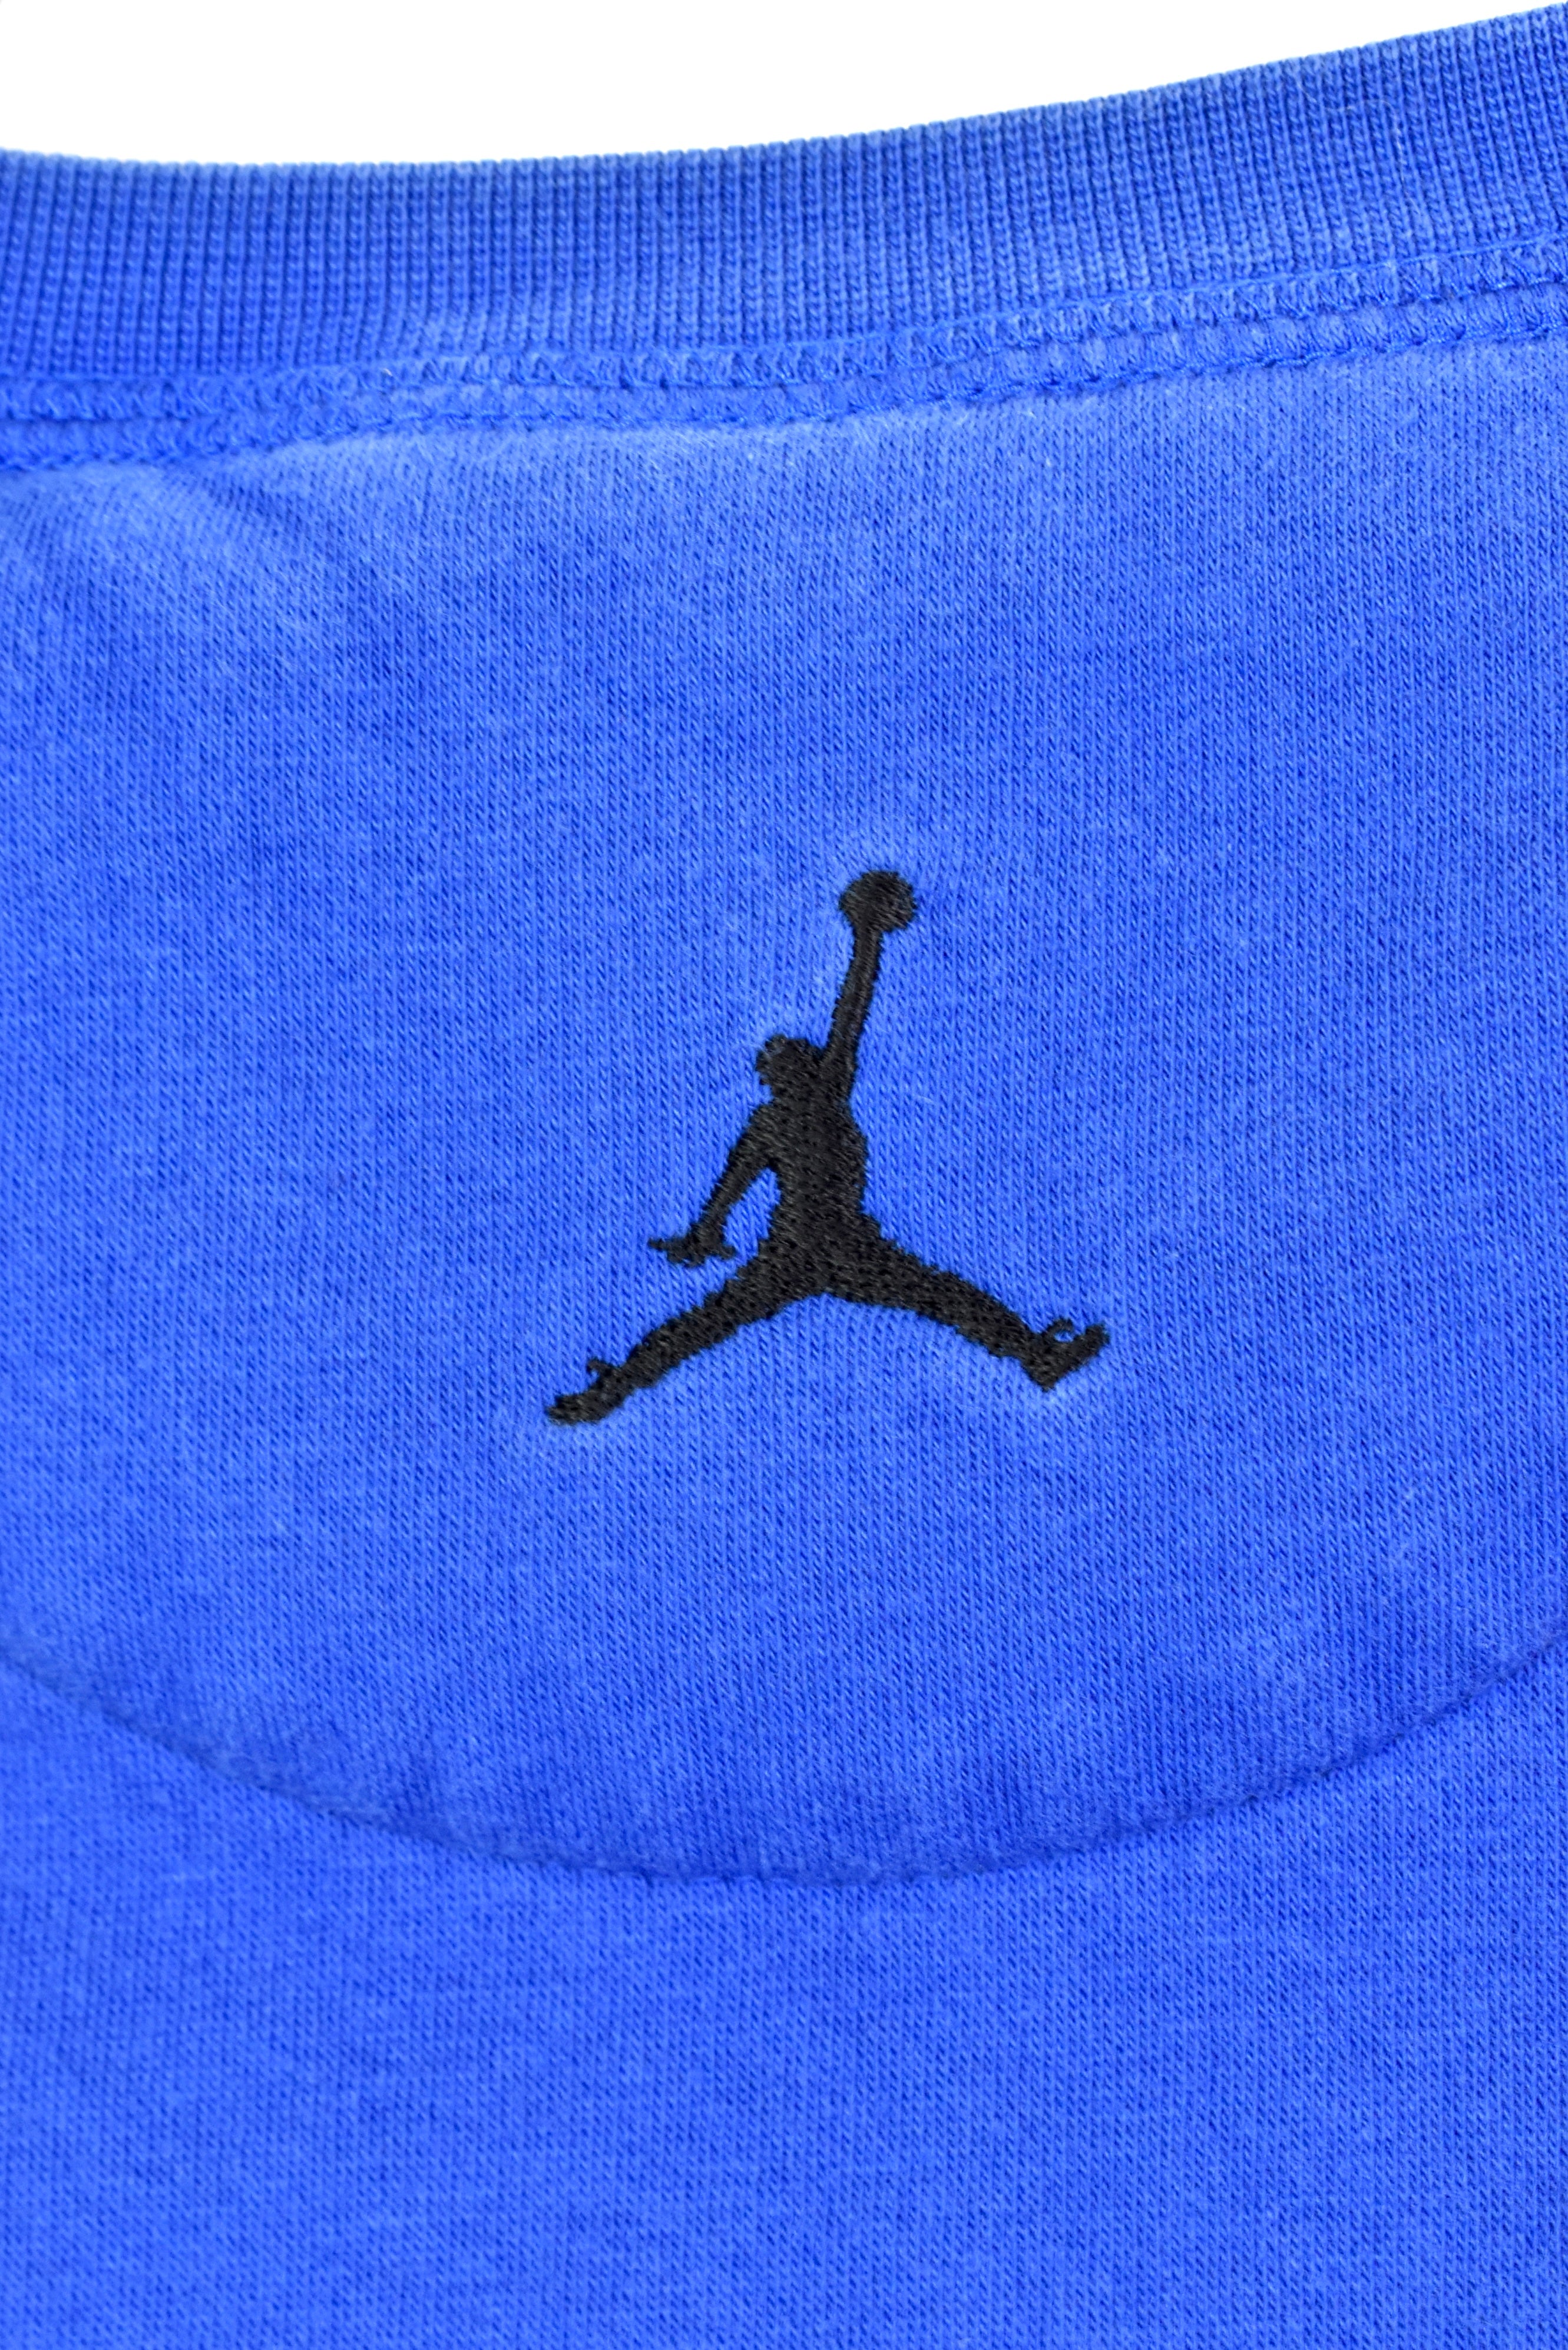 Vintage Nike sweatshirt, Air Jordan long sleeve graphic crewneck - small, blue NIKE